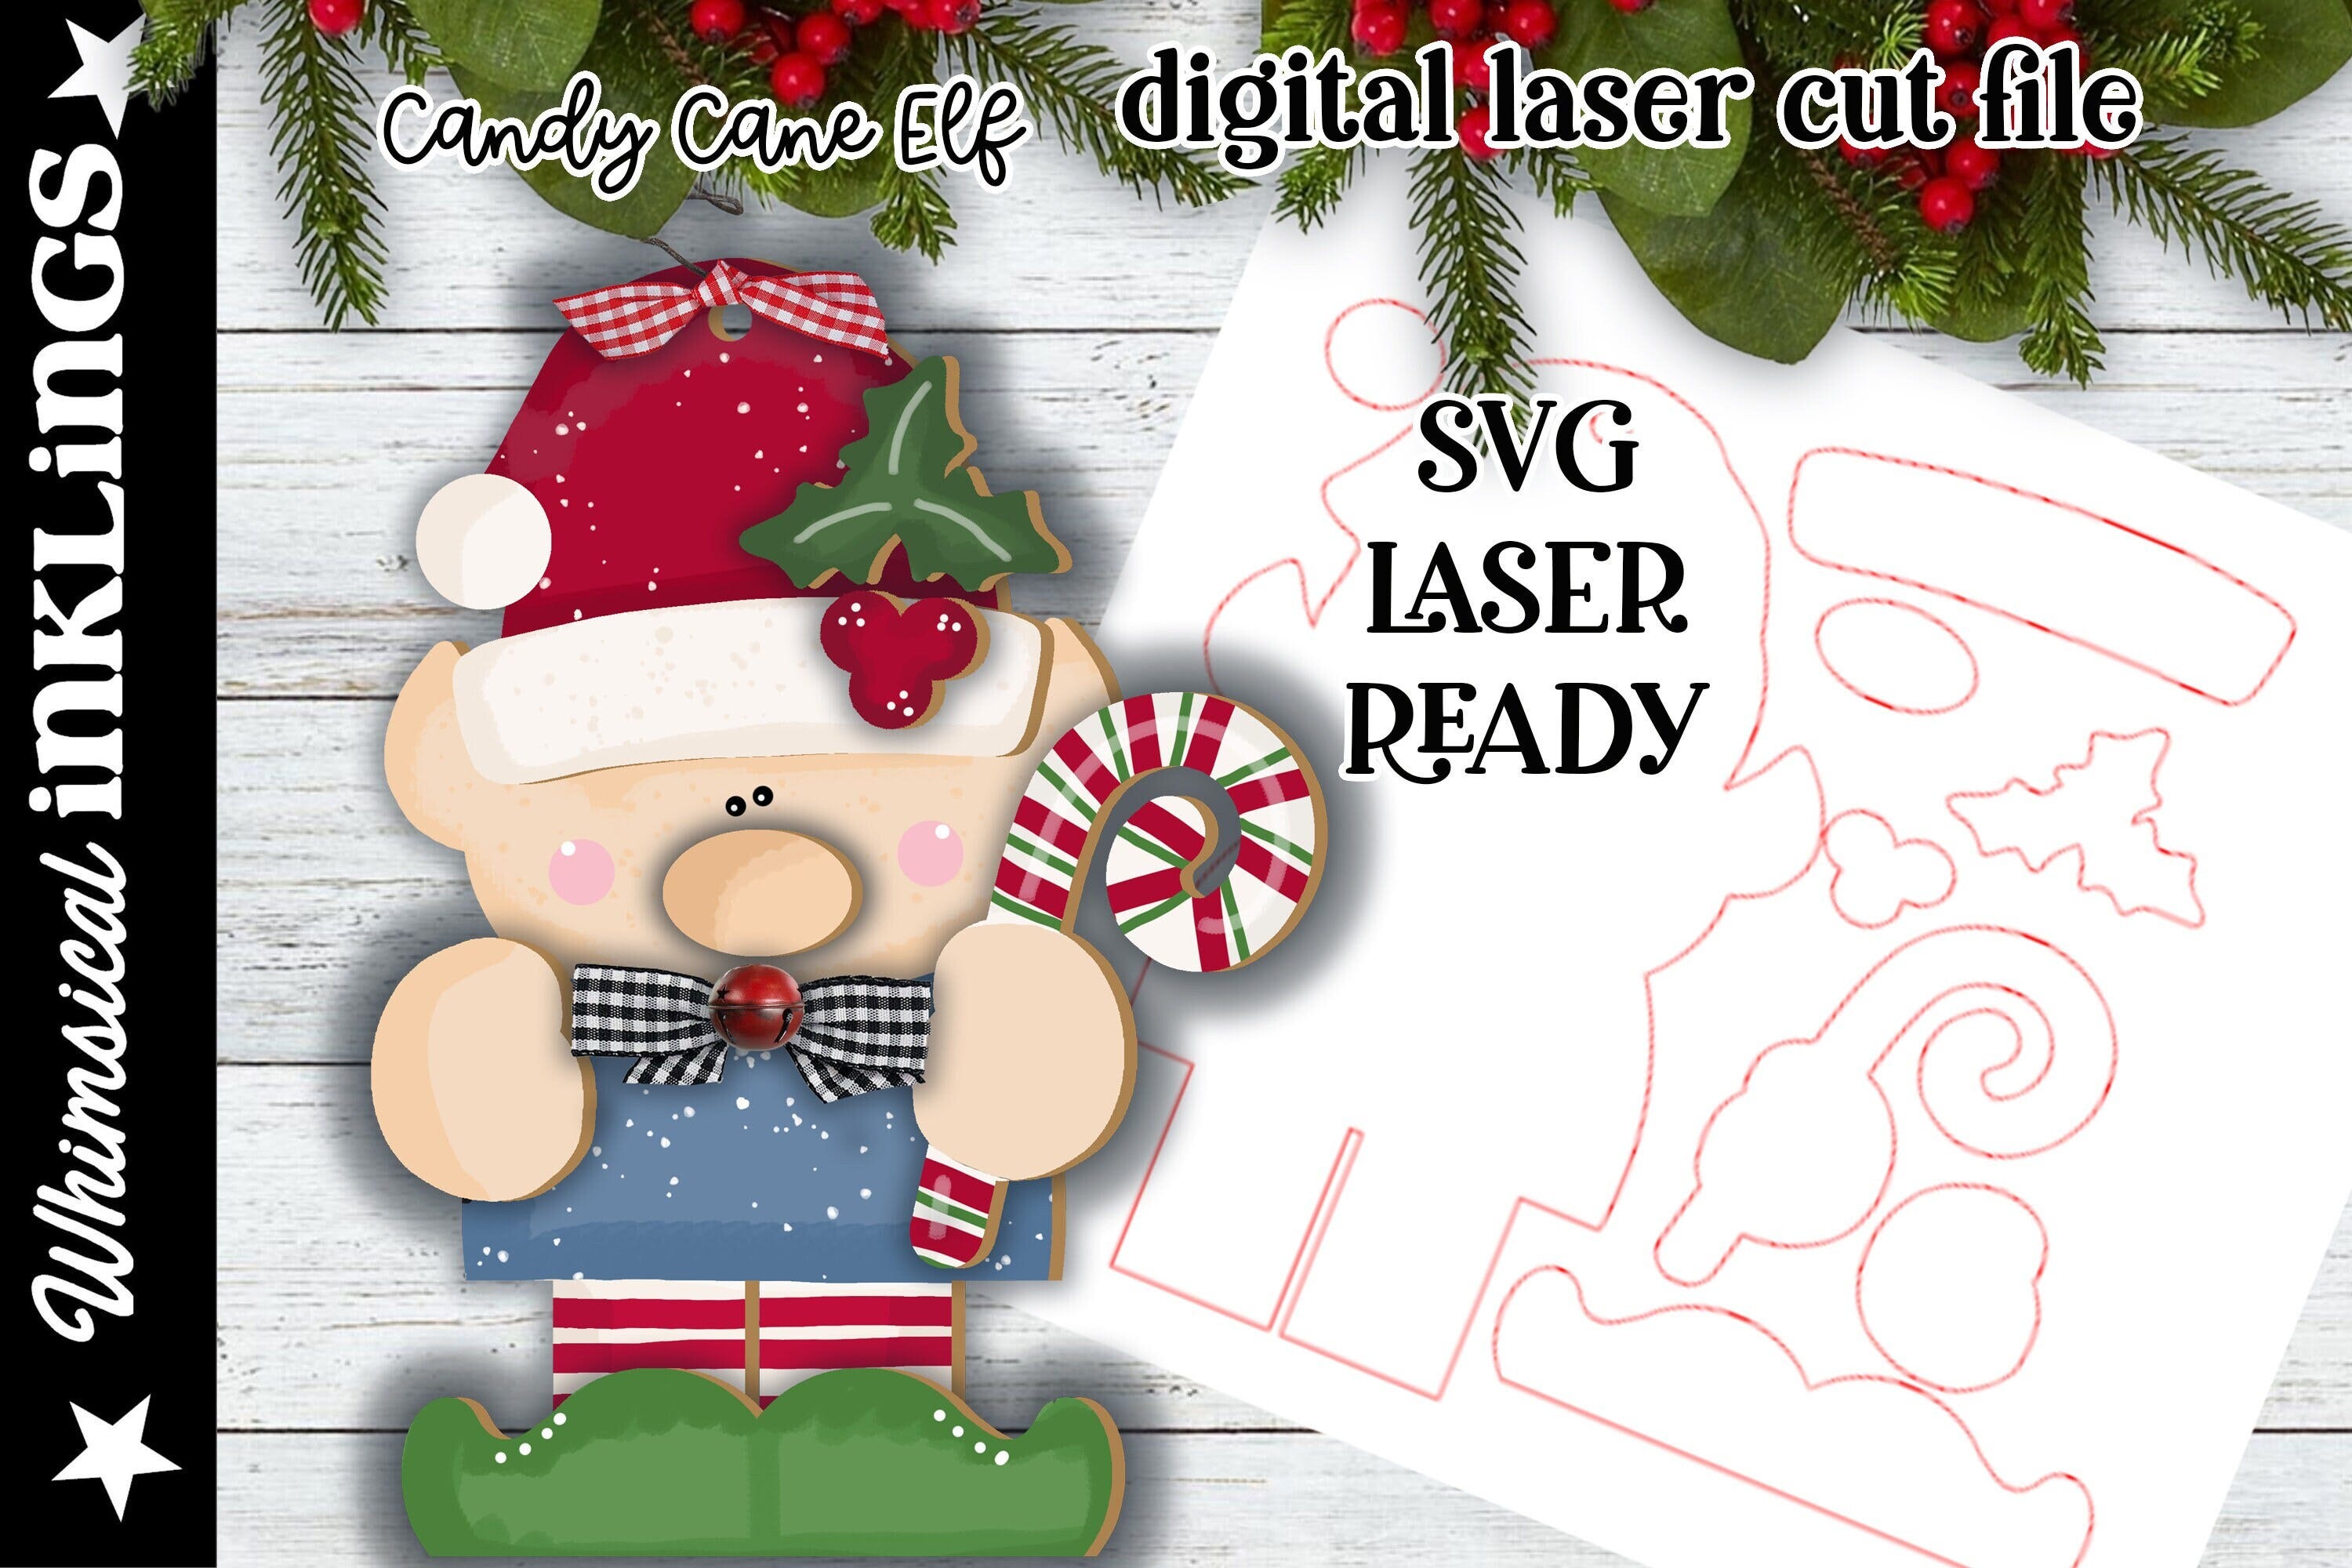 Candy Cane Elf Ornament SVG| Laser Cut Elf Ornament| Glow forge| Ornament SVG